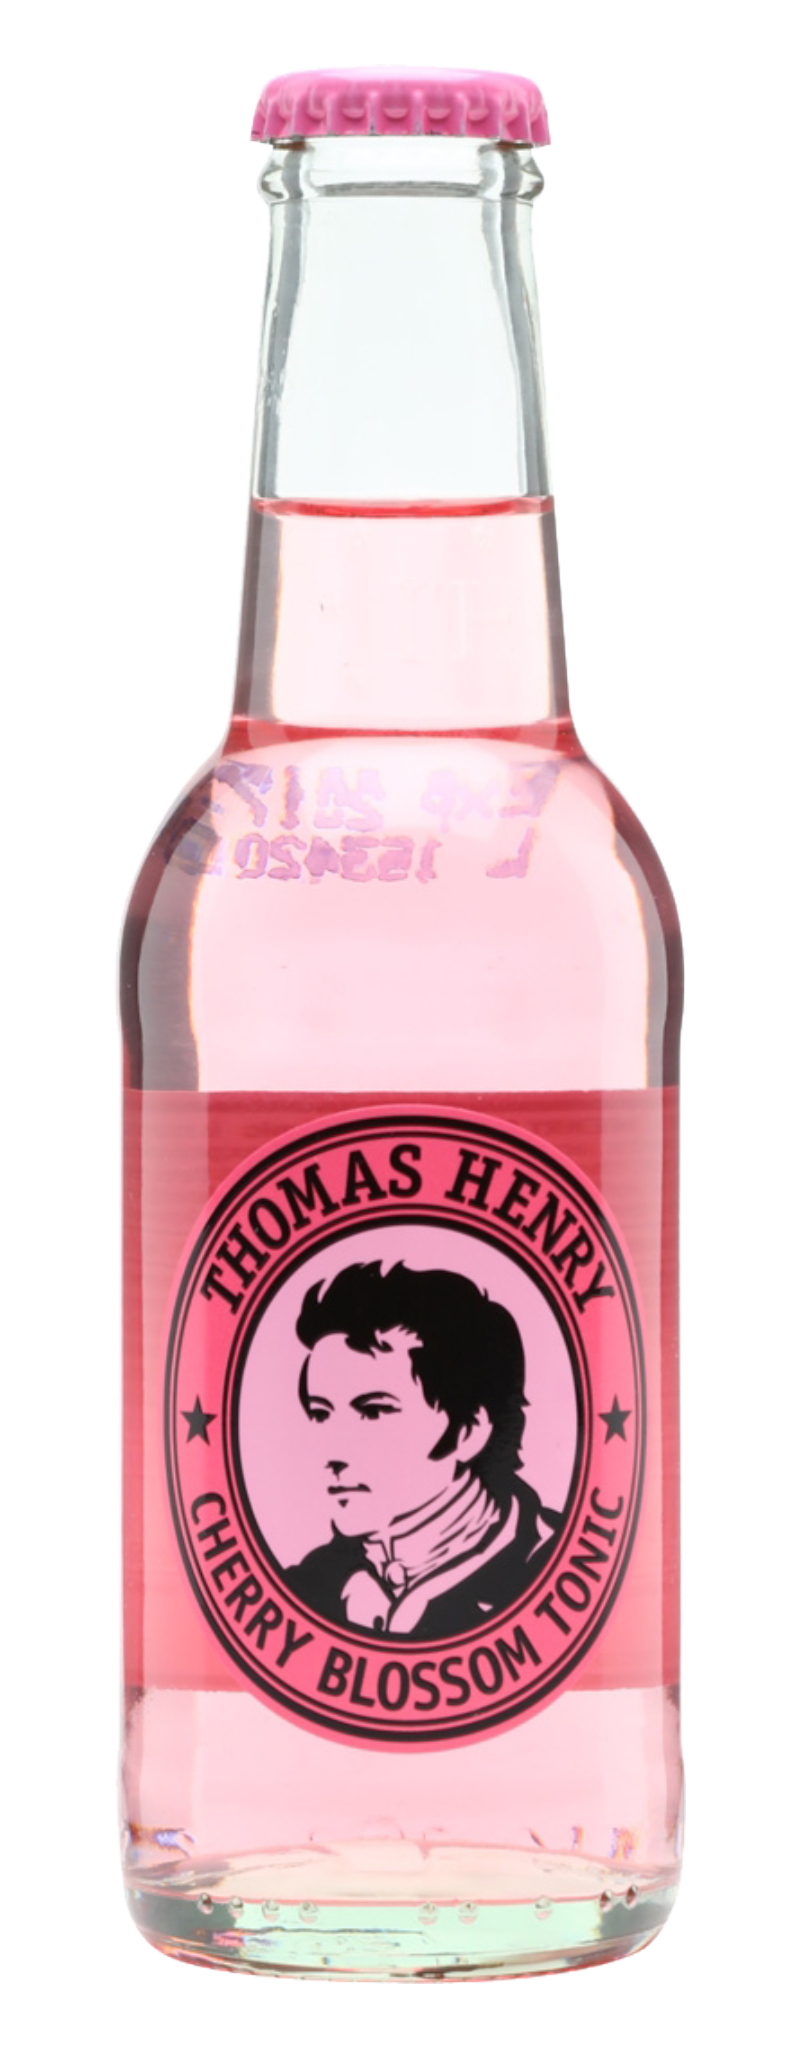 Thomas Henry Cherry Blossom Tonic (thùng 24 chai)  - 200ml